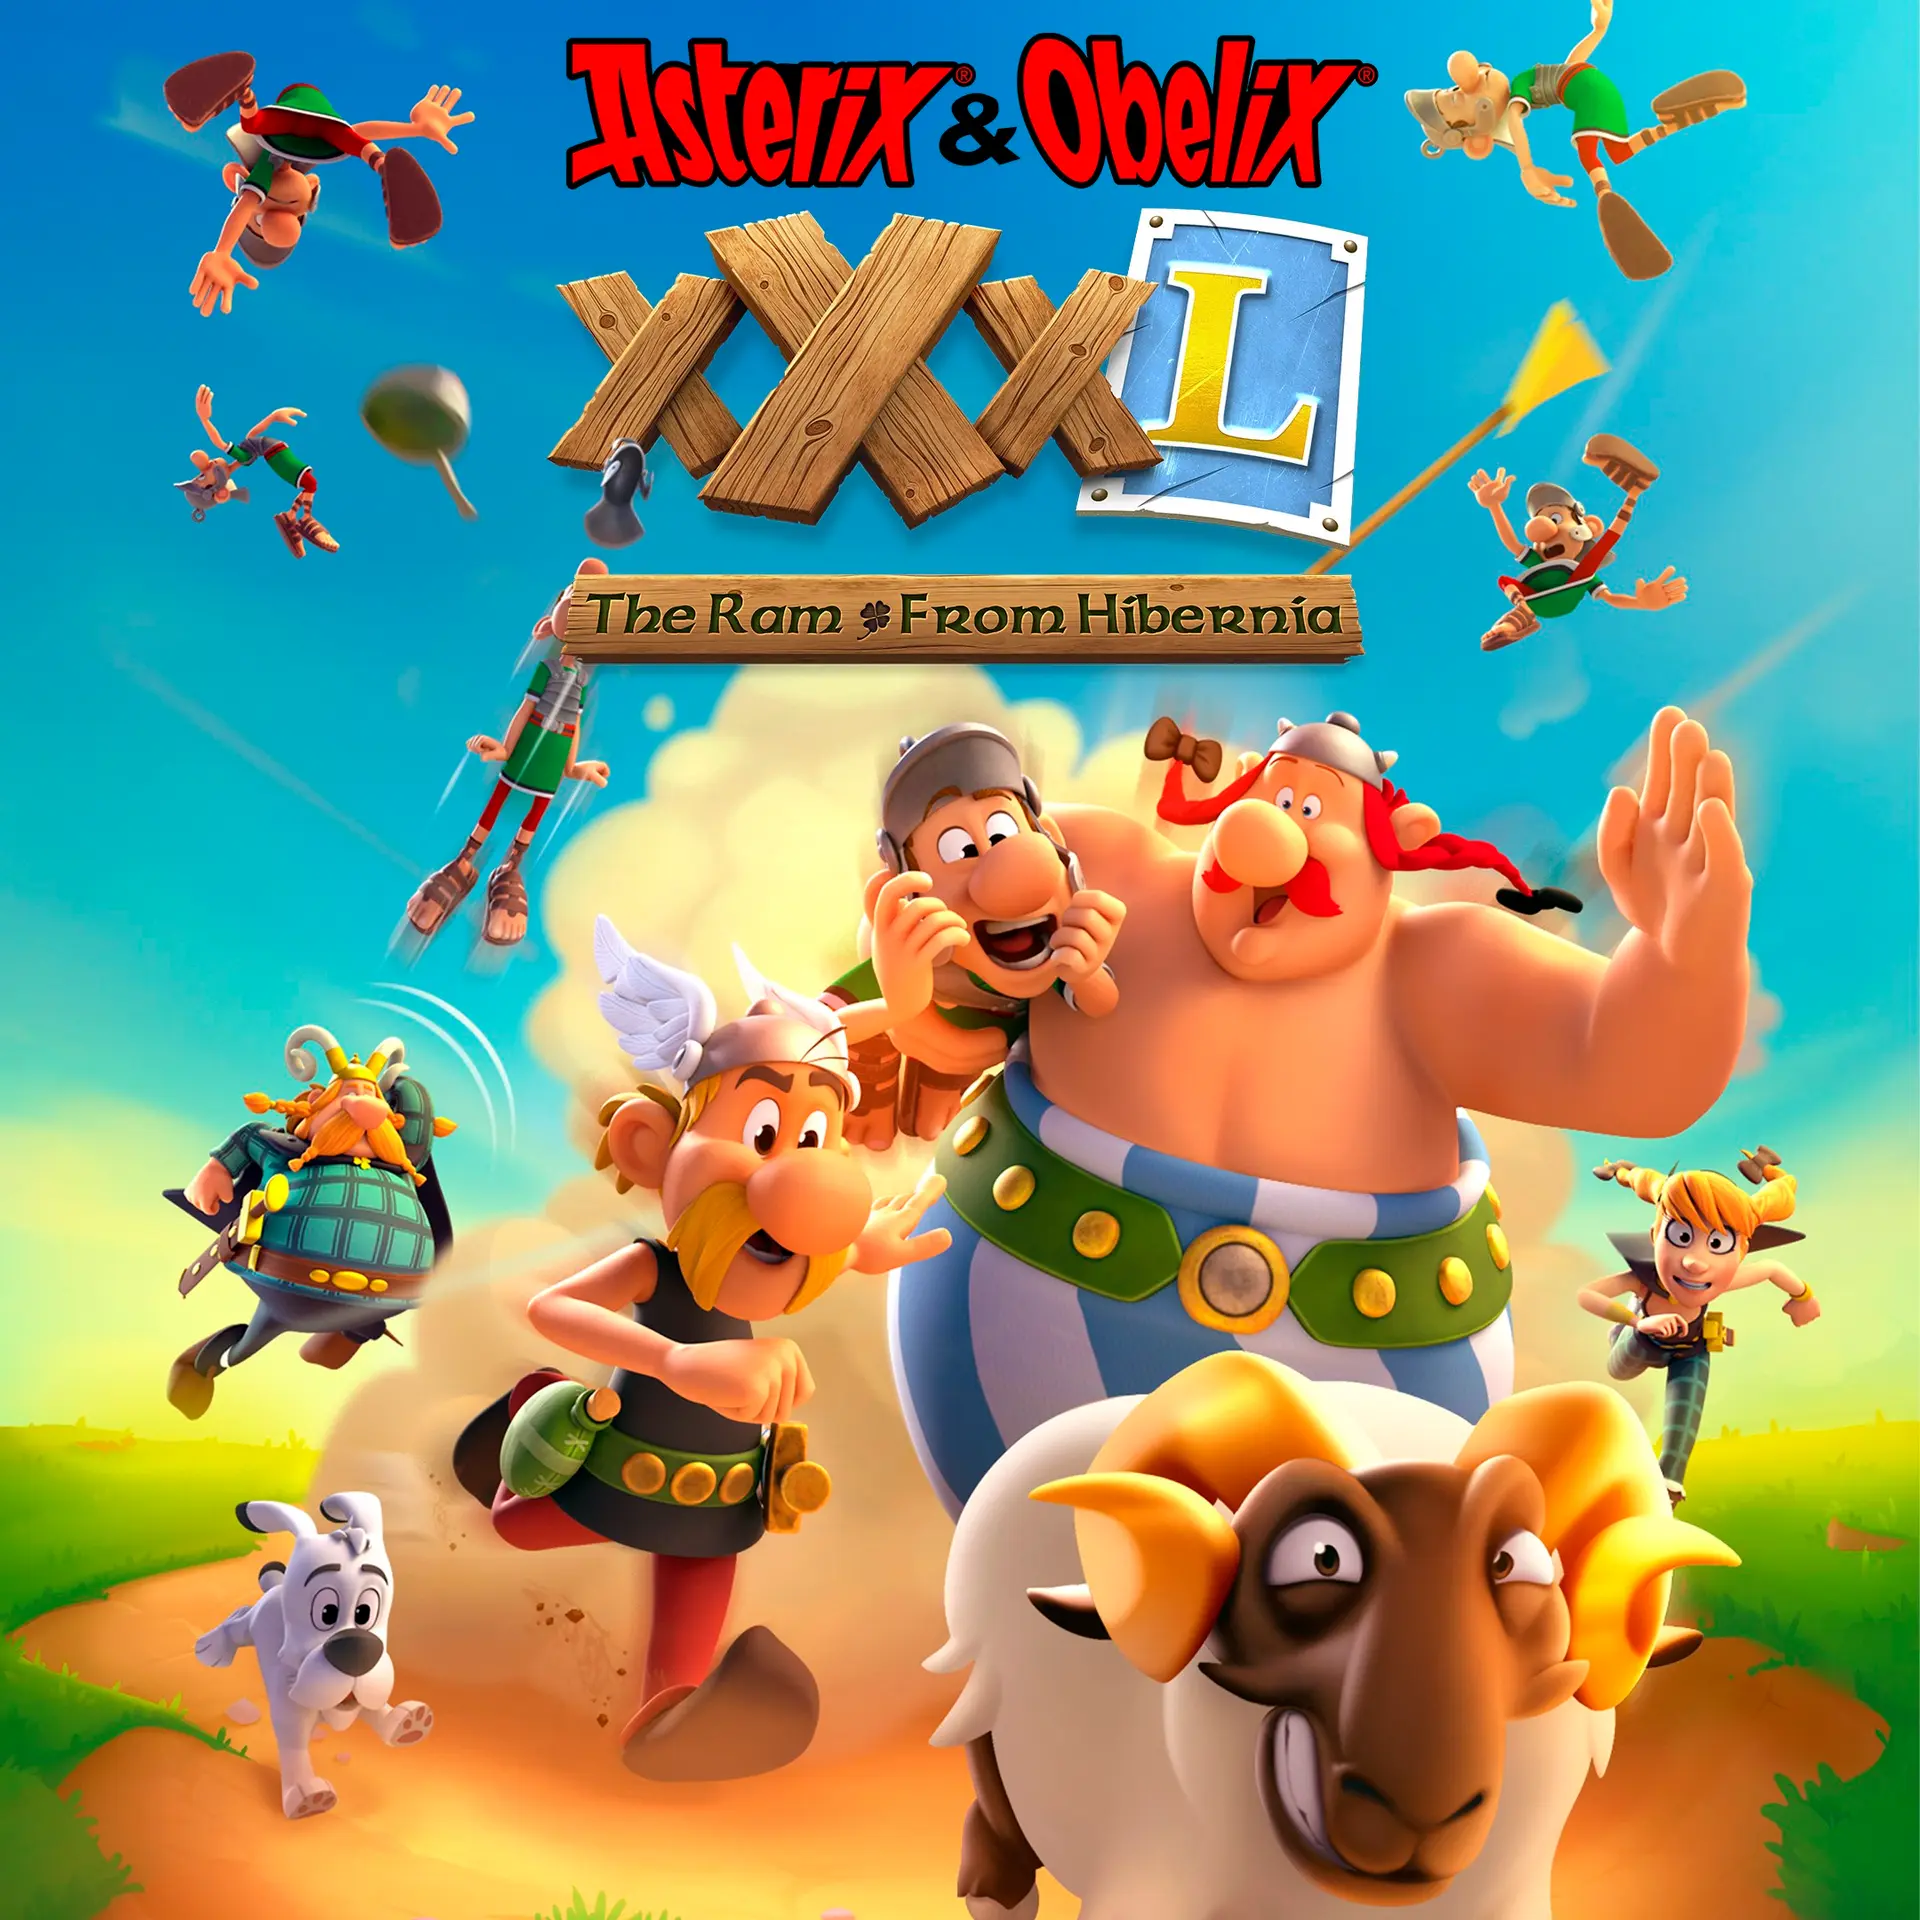 Asterix & Obelix XXXL – The Ram From Hibernia (Xbox Games US)